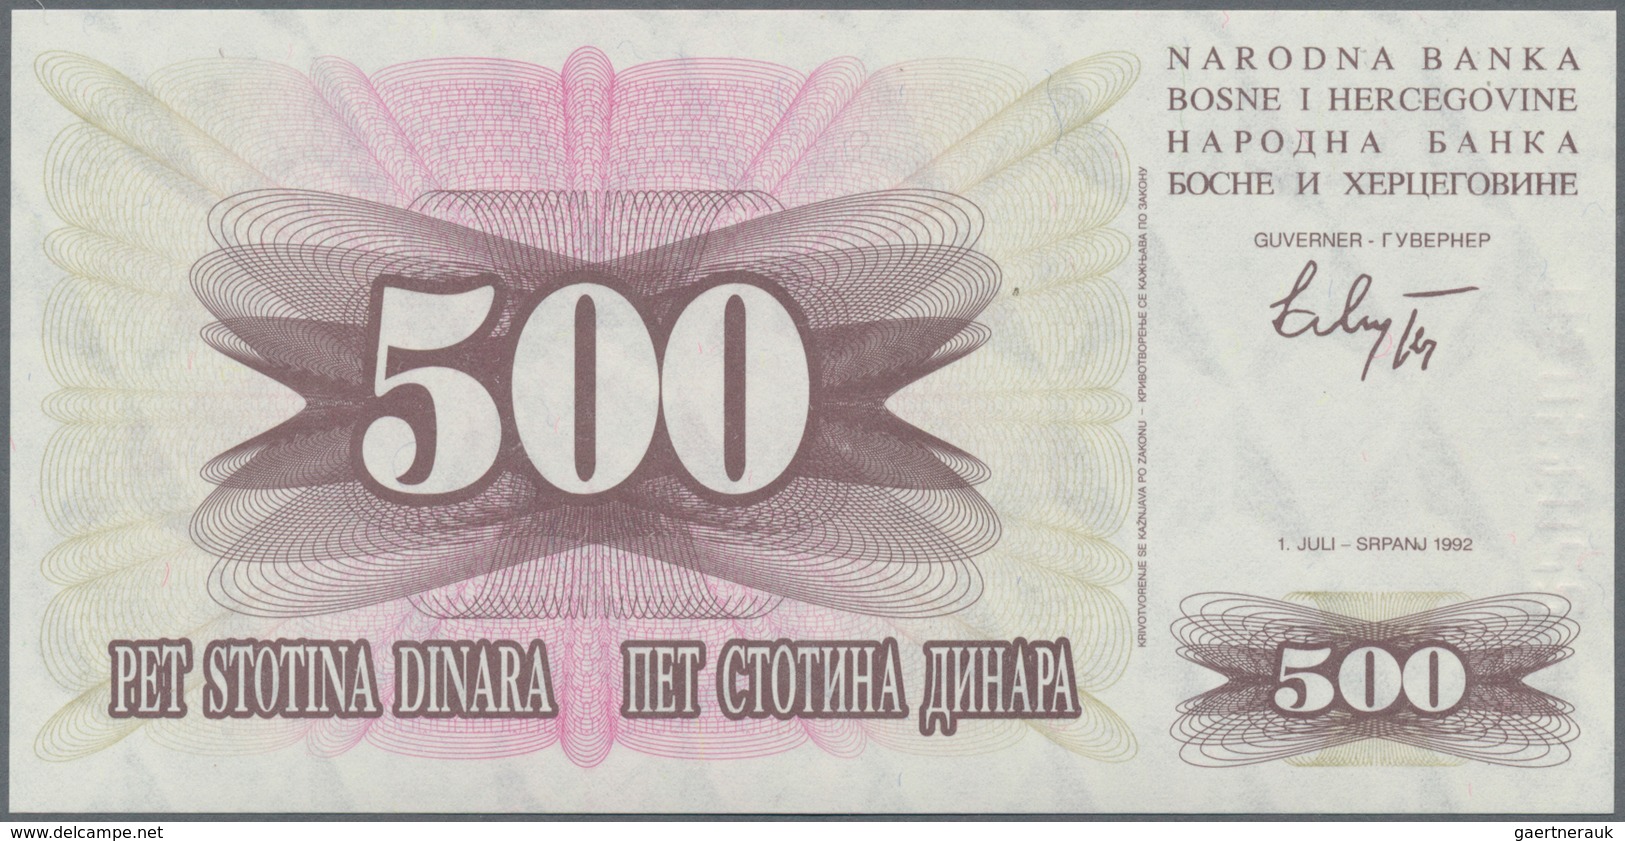 Bosnia & Herzegovina / Bosnien & Herzegovina: Huge lot with more than 600 banknotes Bosnia & Herzego